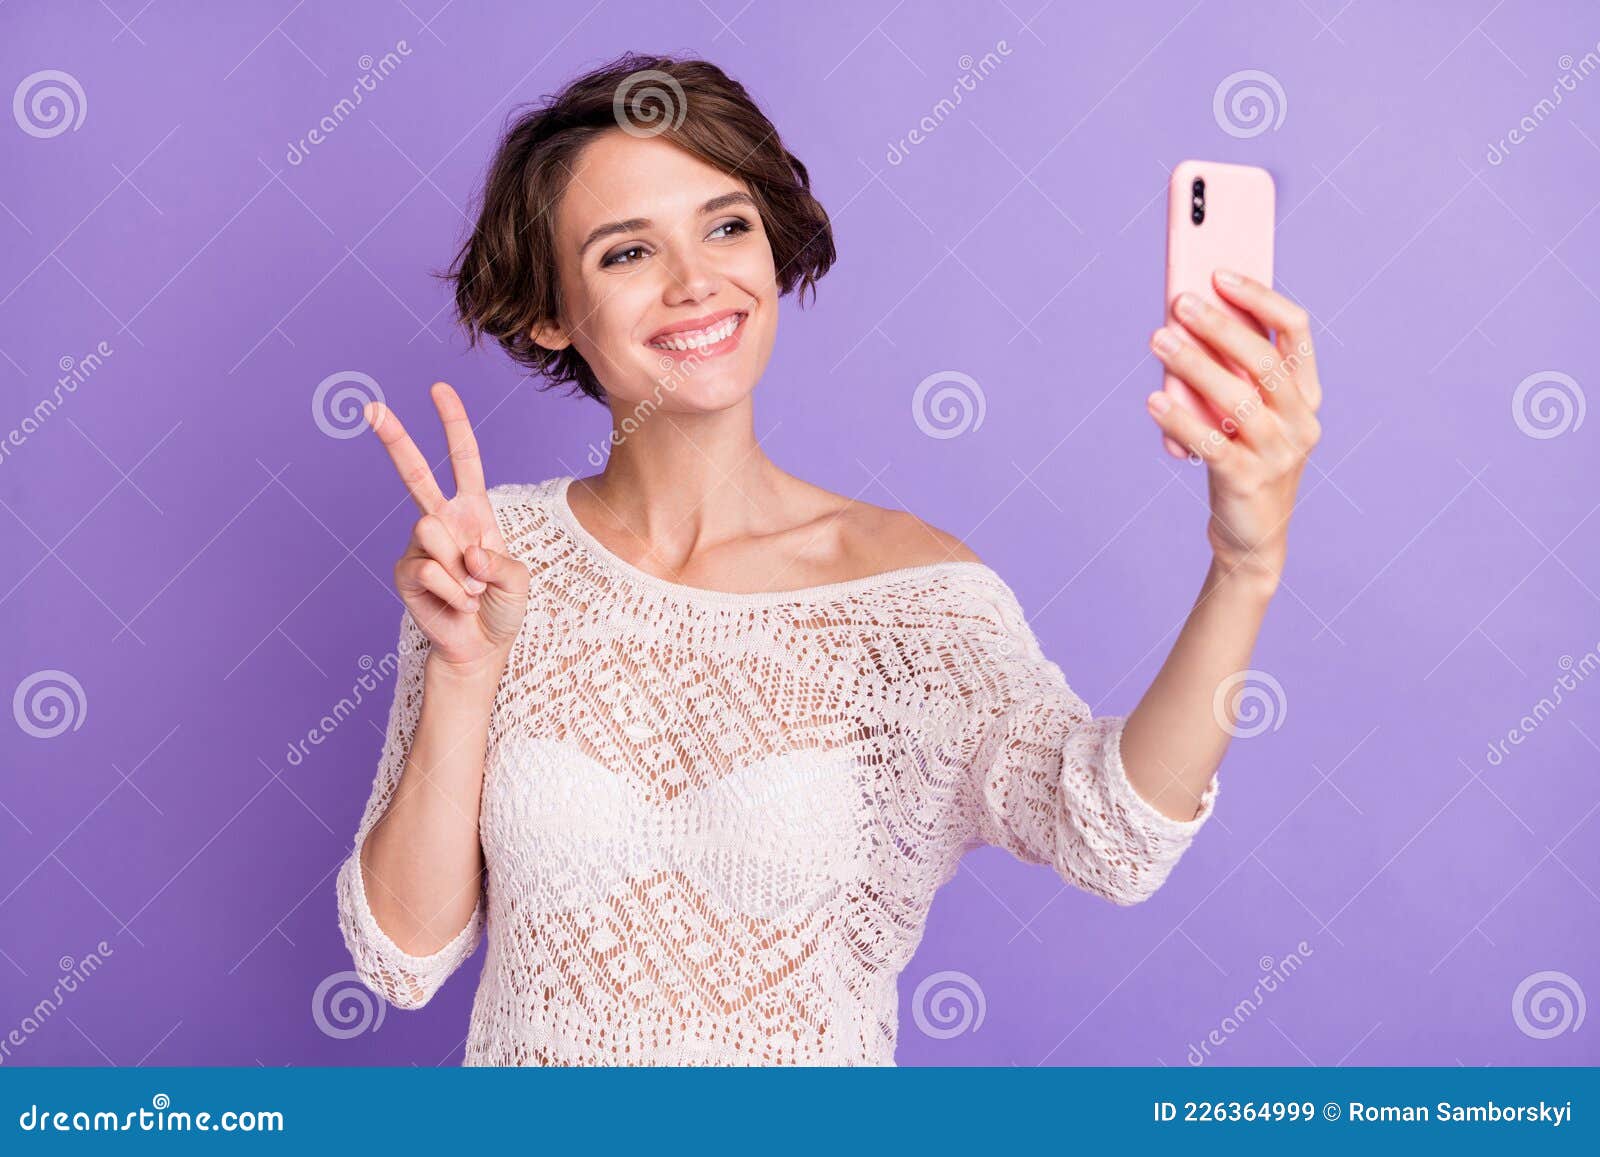 petite girl fingering selfie free hd photo